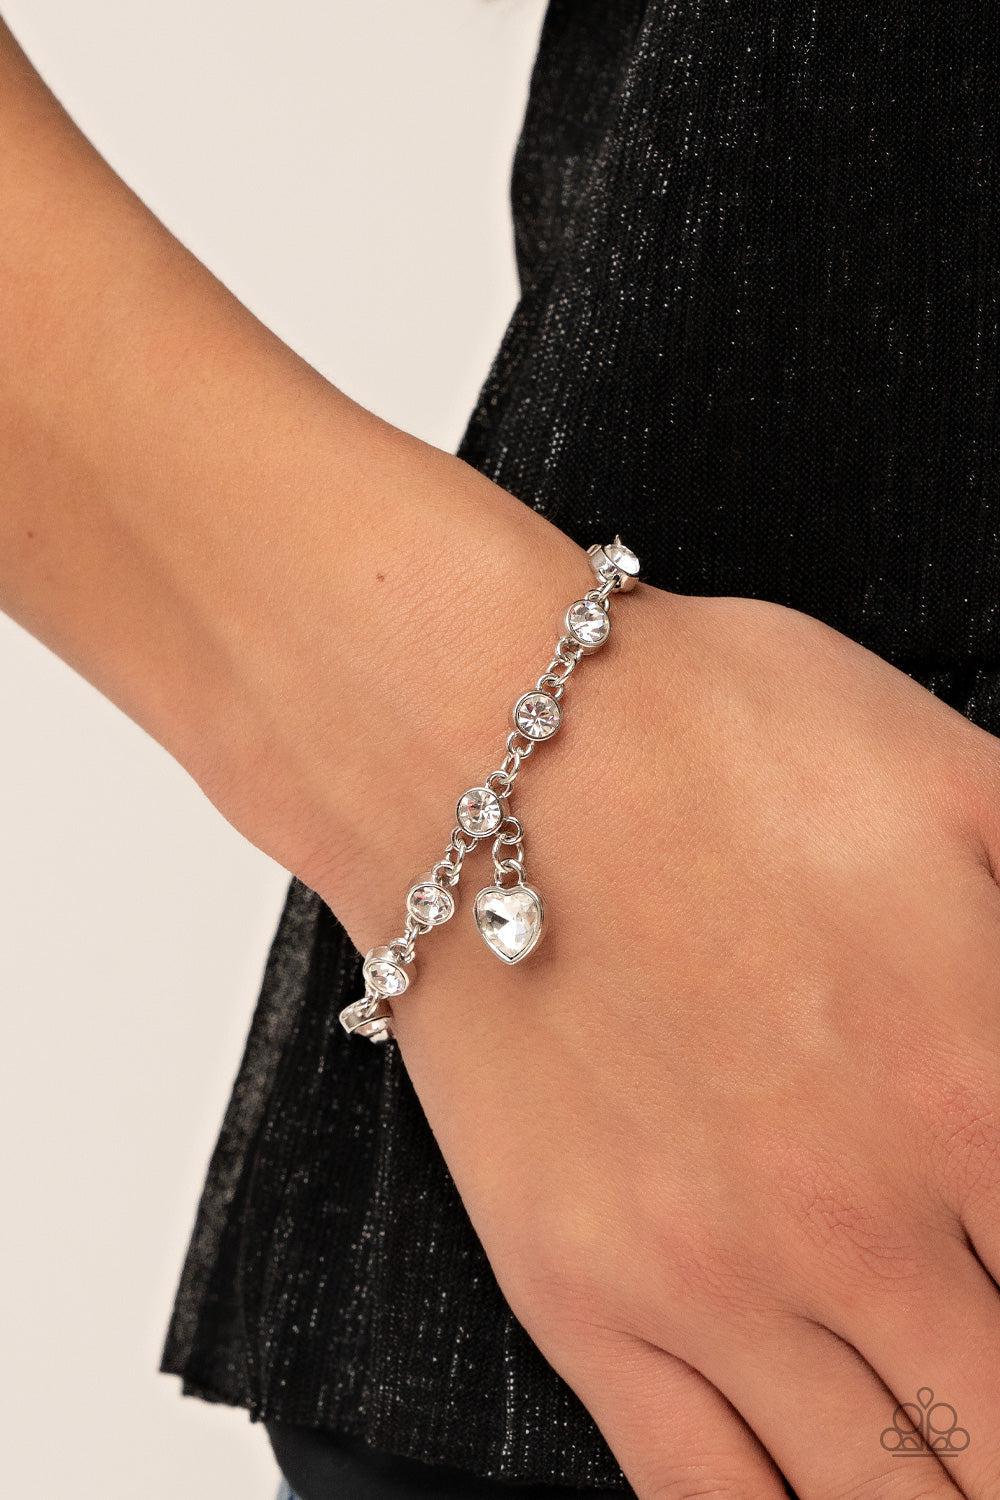 Truly Lovely White Rhinestone Heart Charm Bracelet - Paparazzi Accessories-on model - CarasShop.com - $5 Jewelry by Cara Jewels